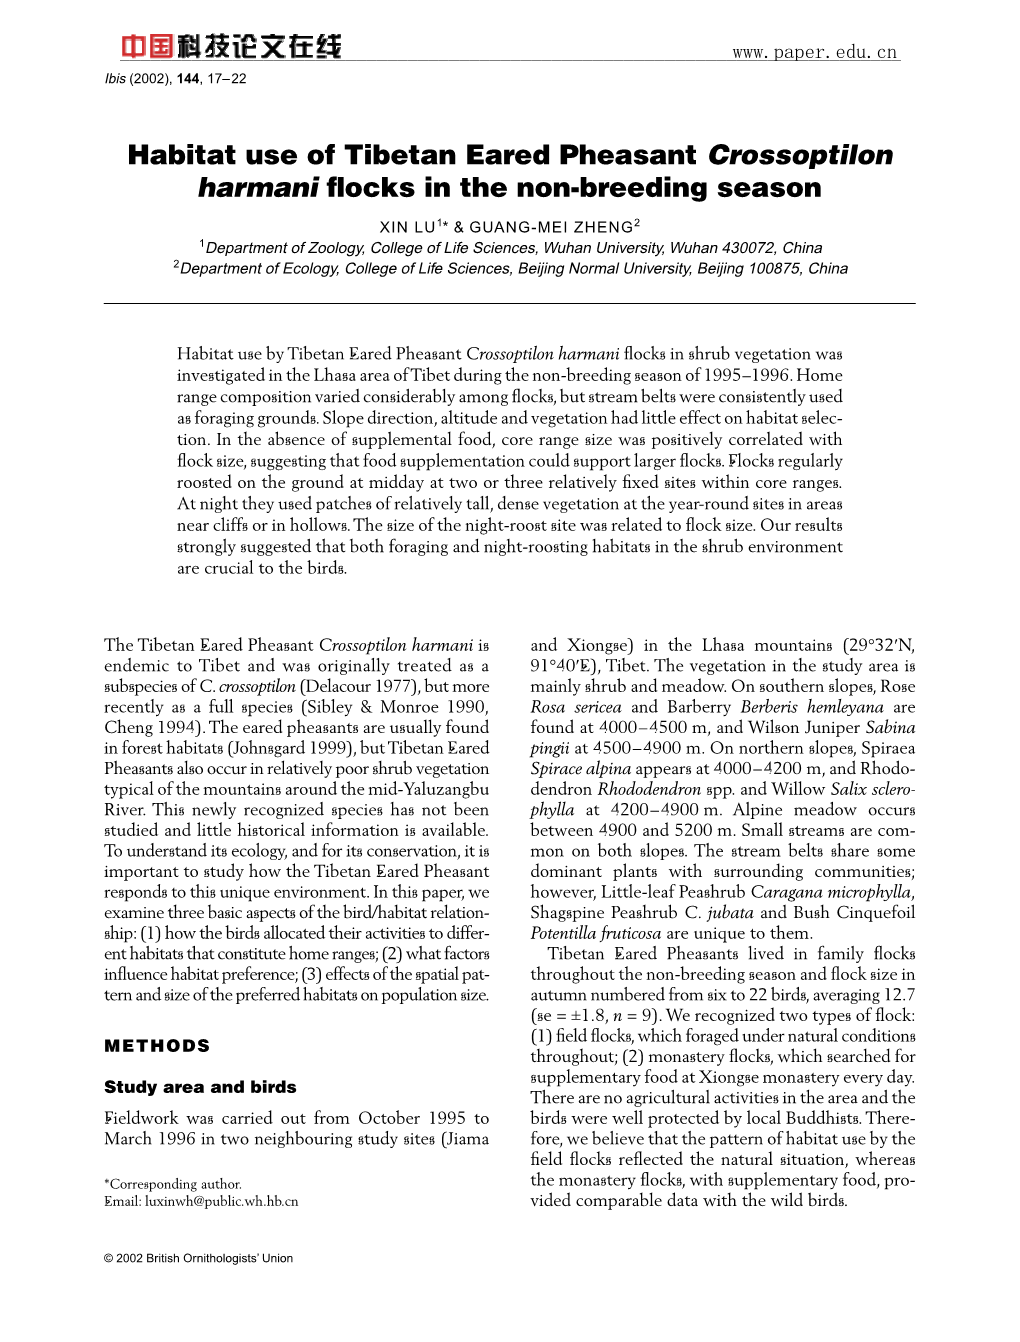 Habitat Use of Tibetan Eared Pheasant Crossoptilon Harmani